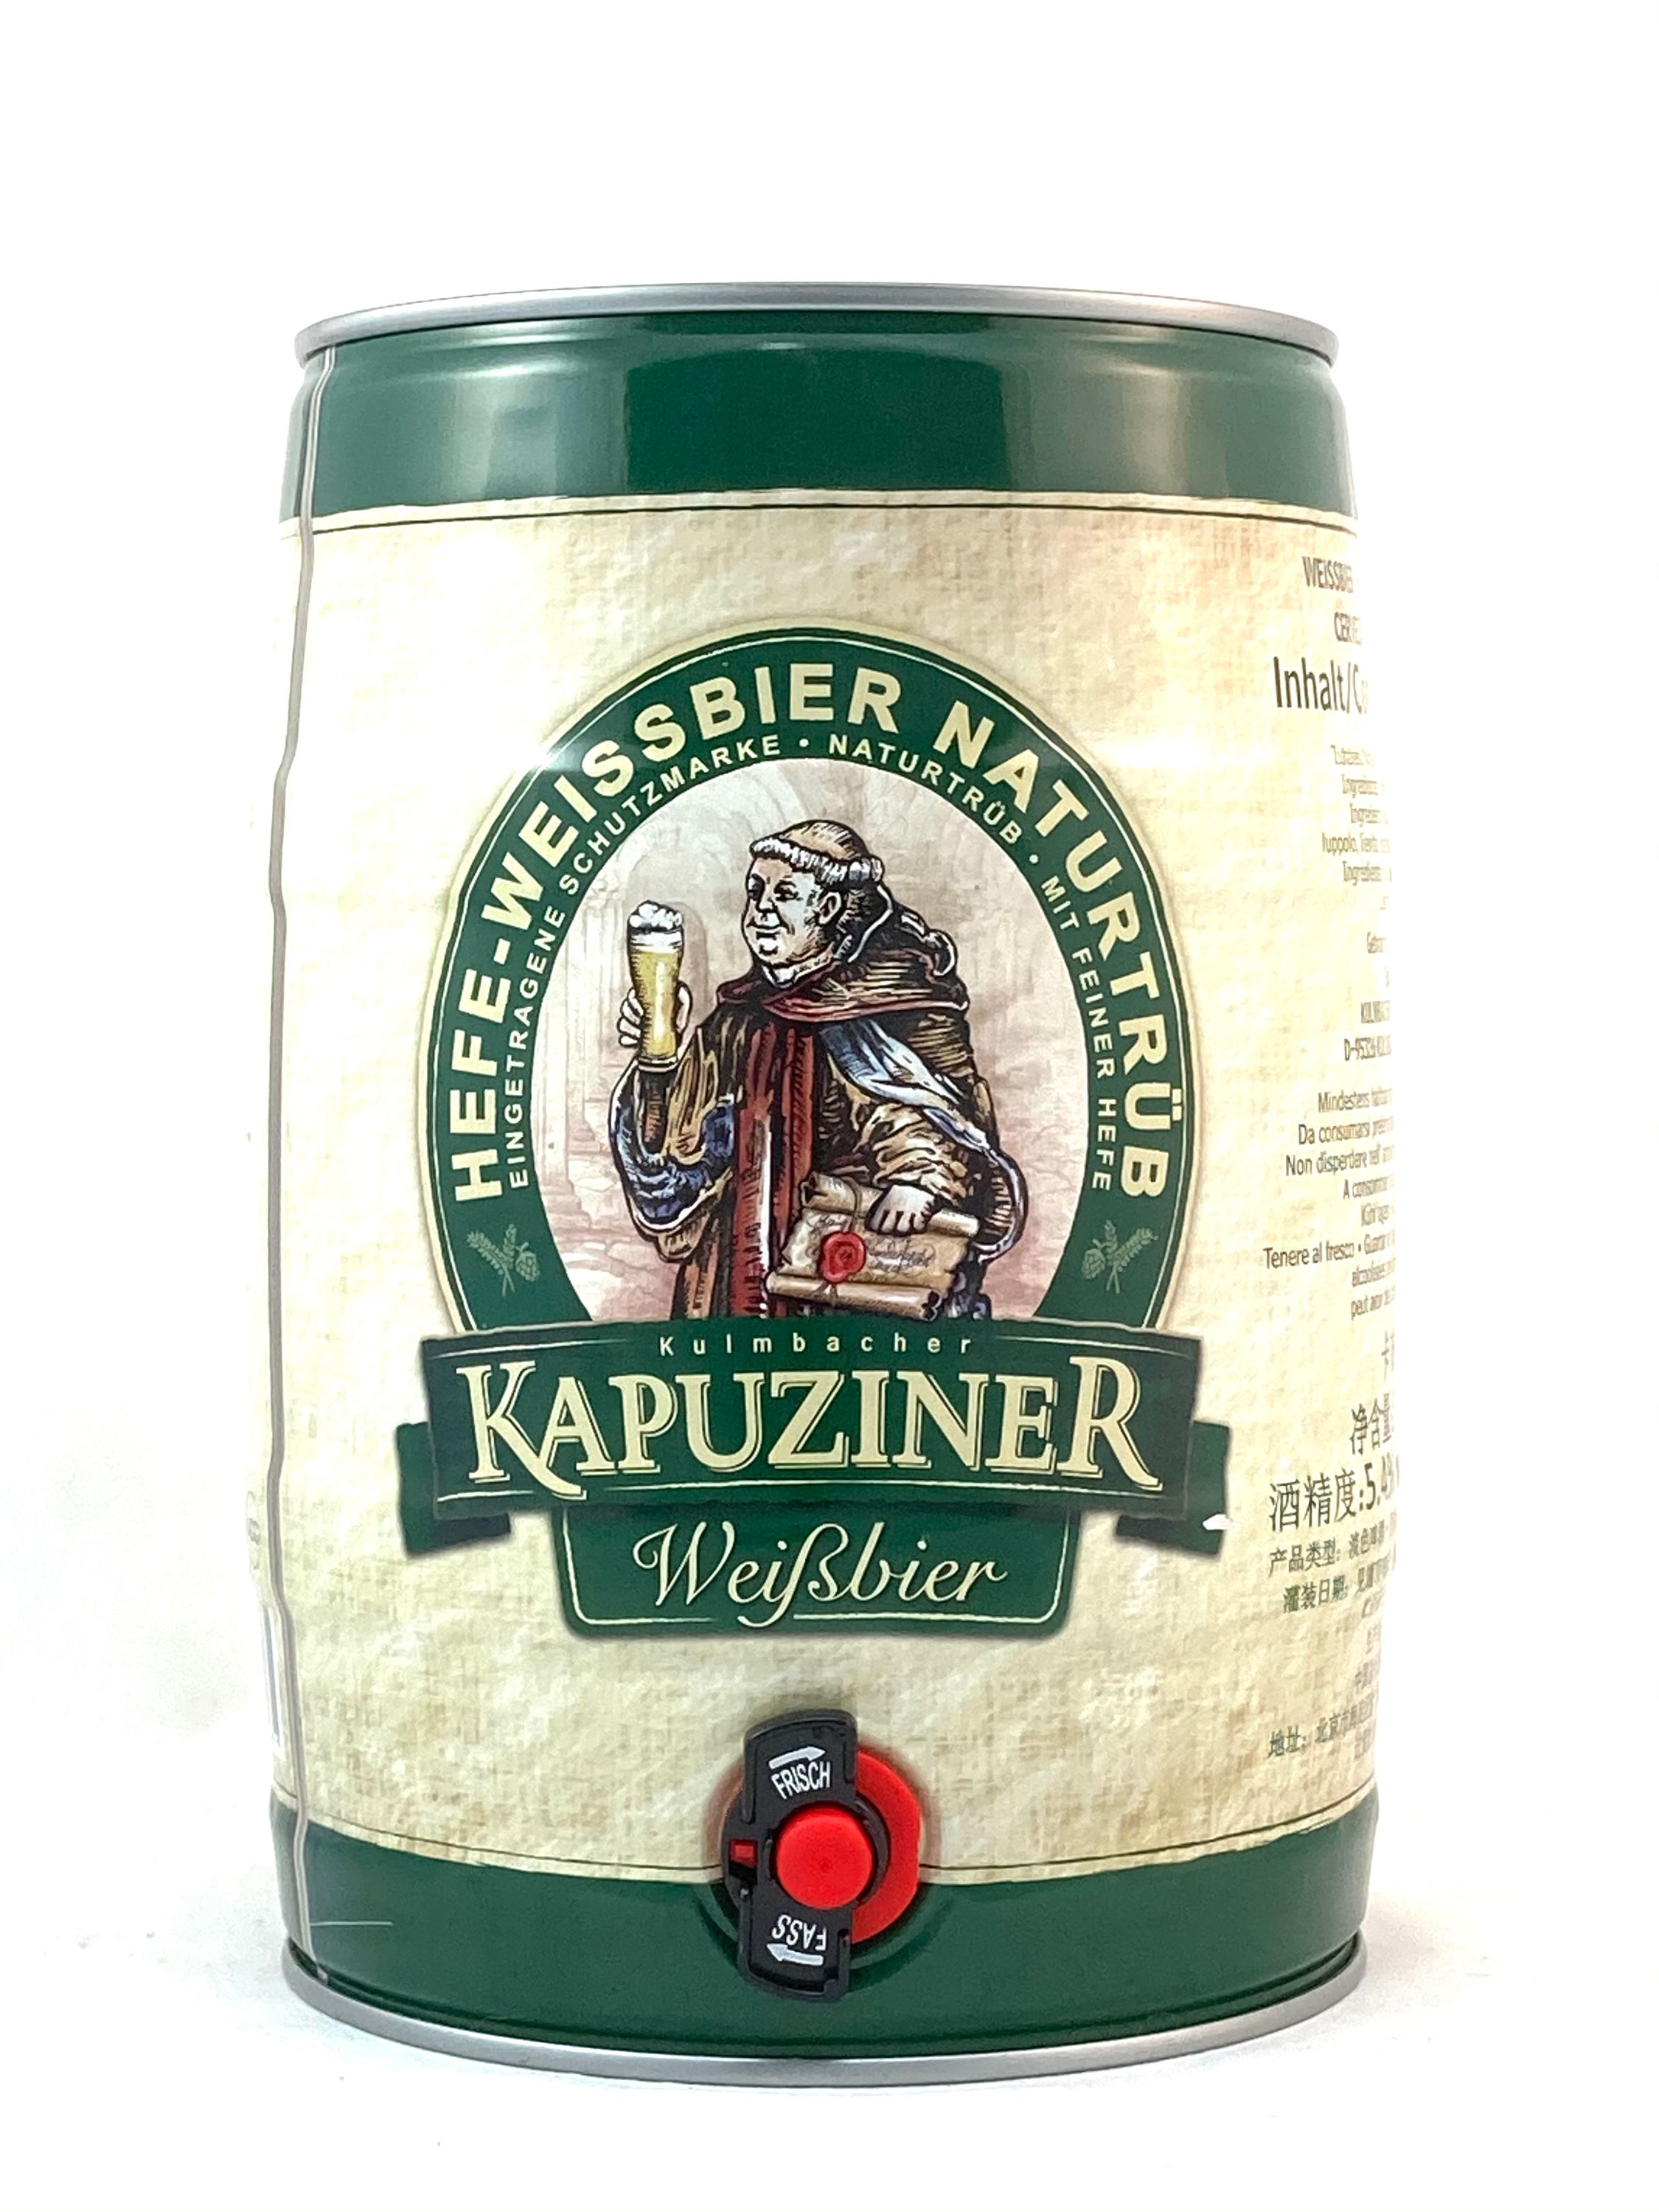 Kapuziner yeast wheat beer party keg 5.0l, alc. 5.4% by volume